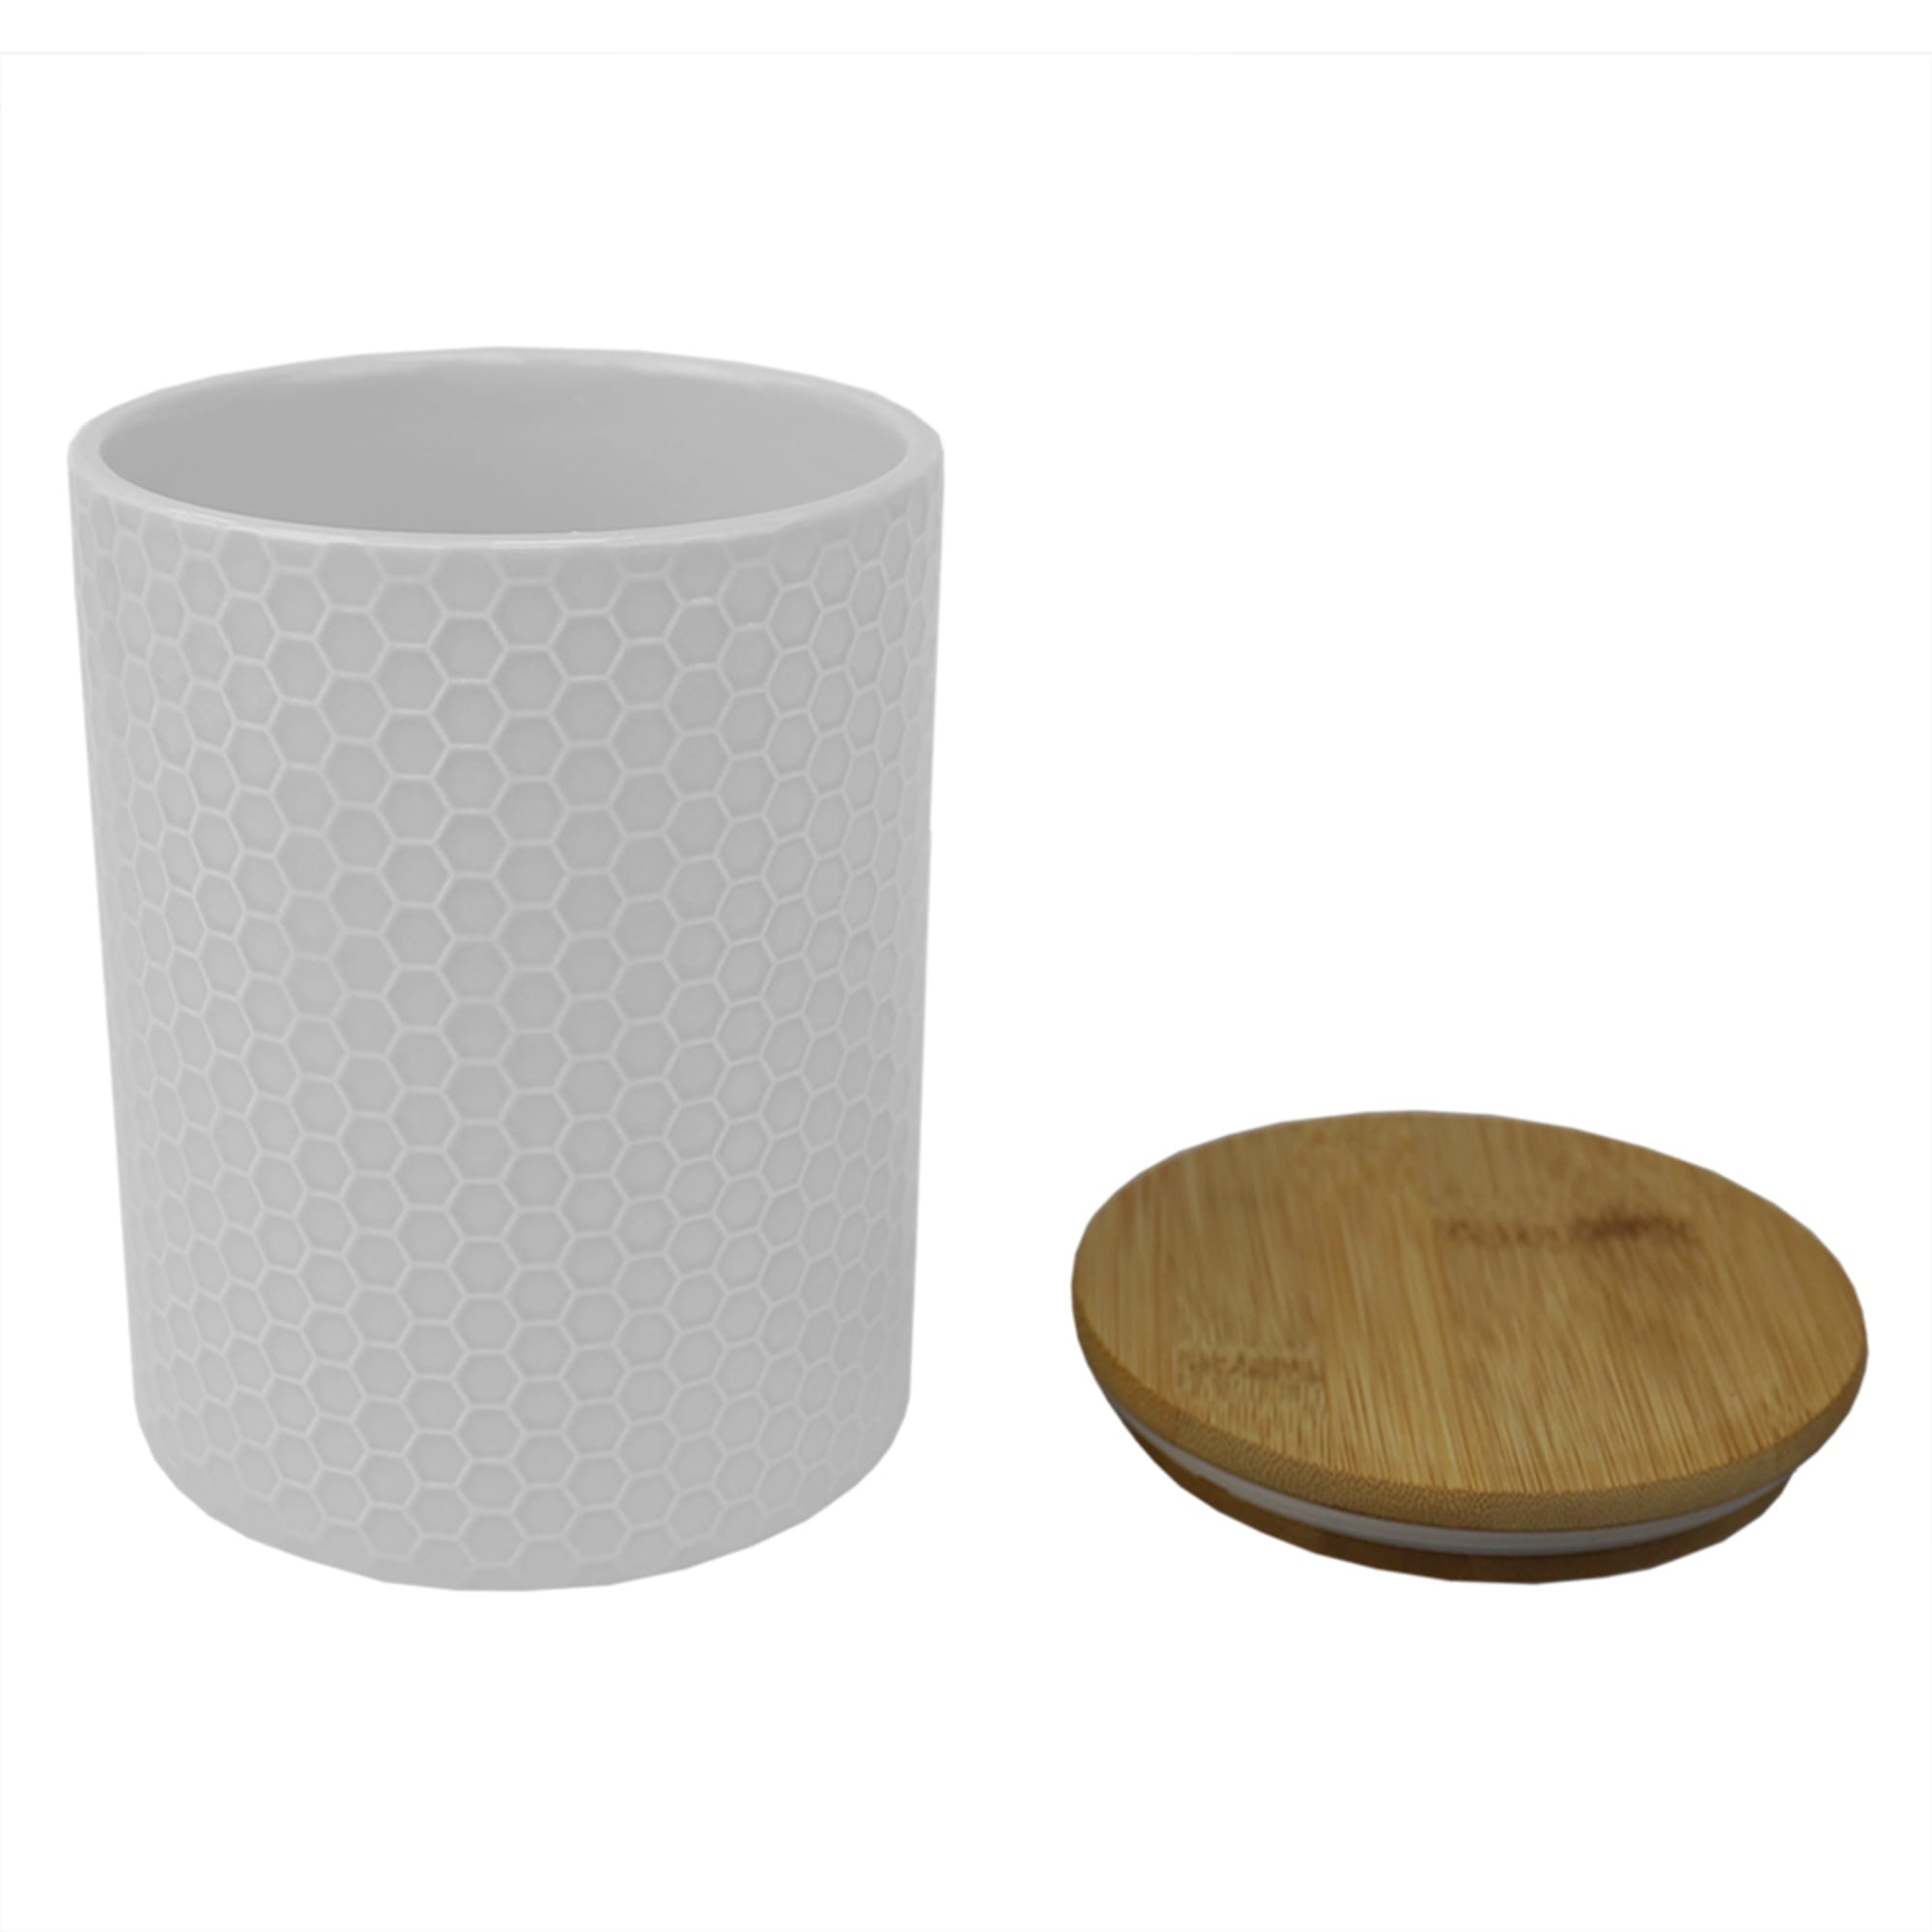 Home Basics Honeycomb Medium Ceramic Canister, White $6 EACH, CASE PACK OF 12